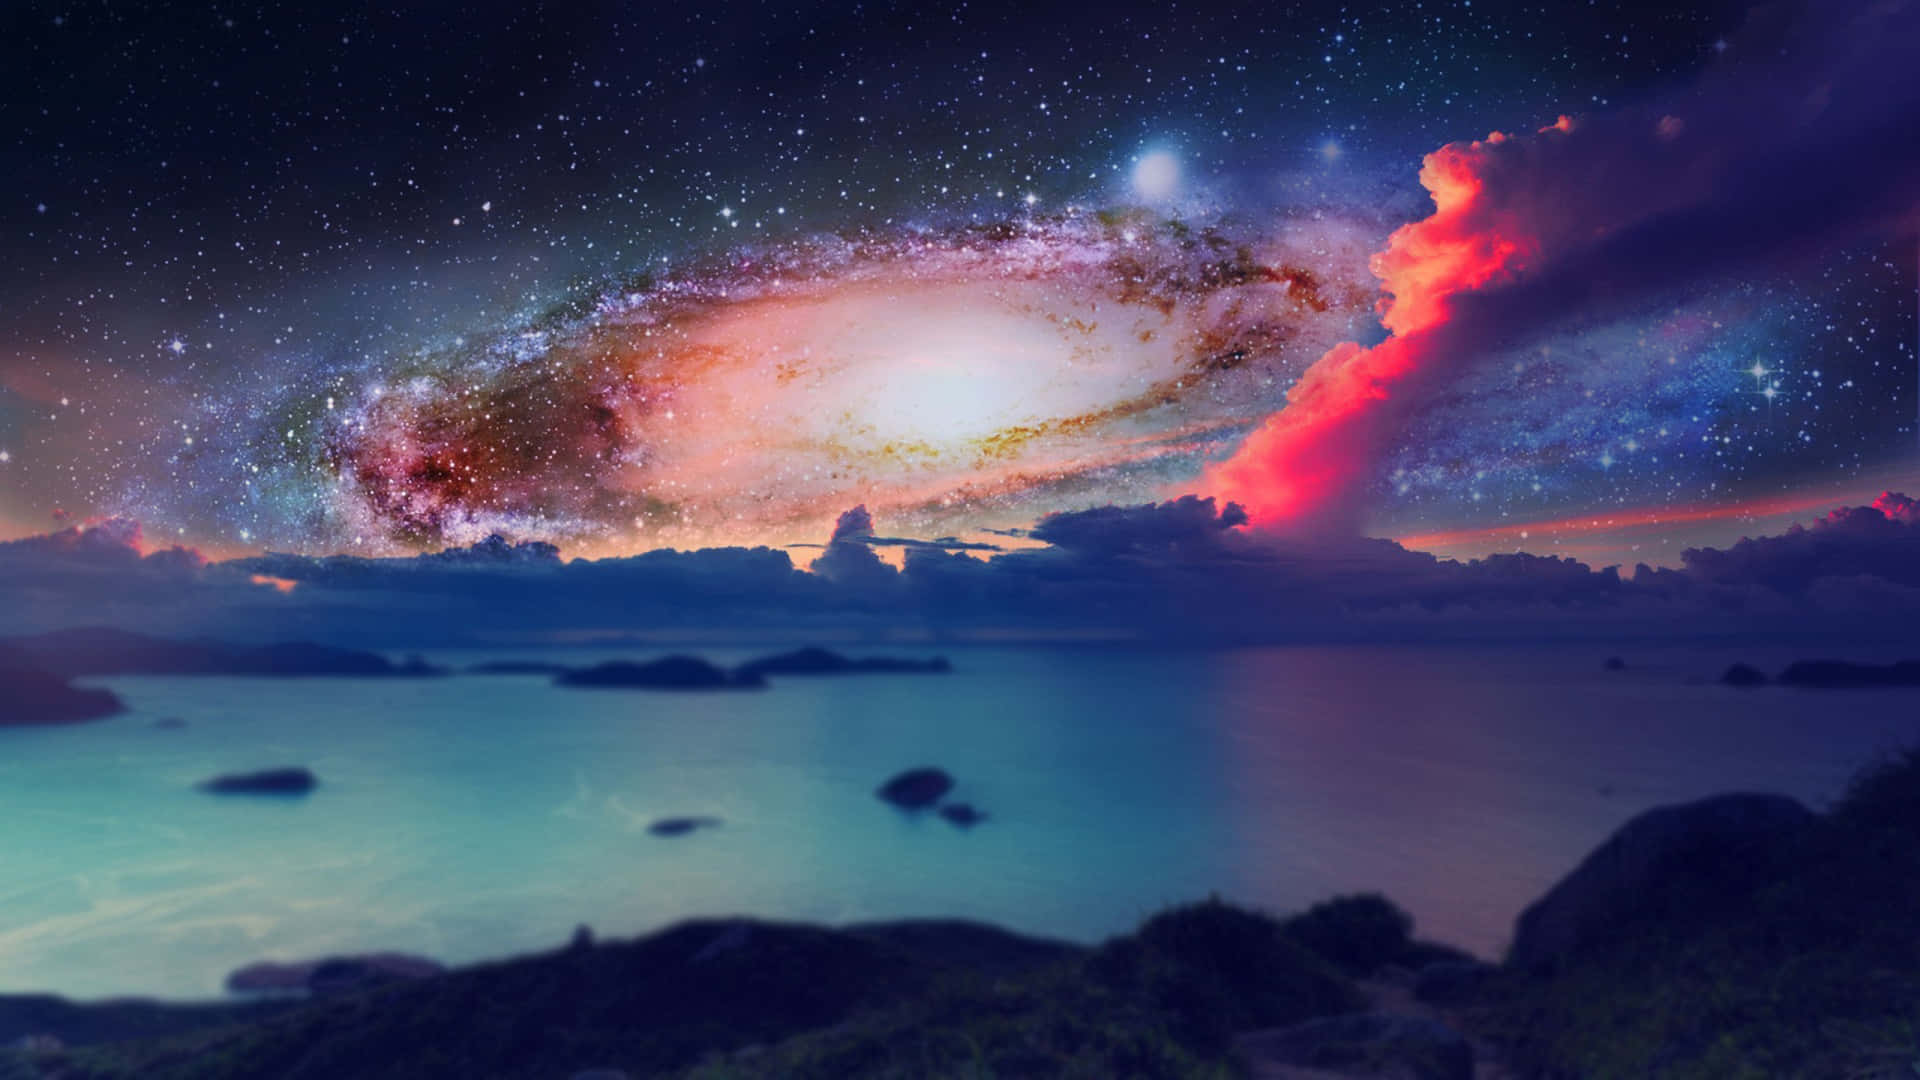 1440p Space Milky Way Galaxy Digital Art Wallpaper